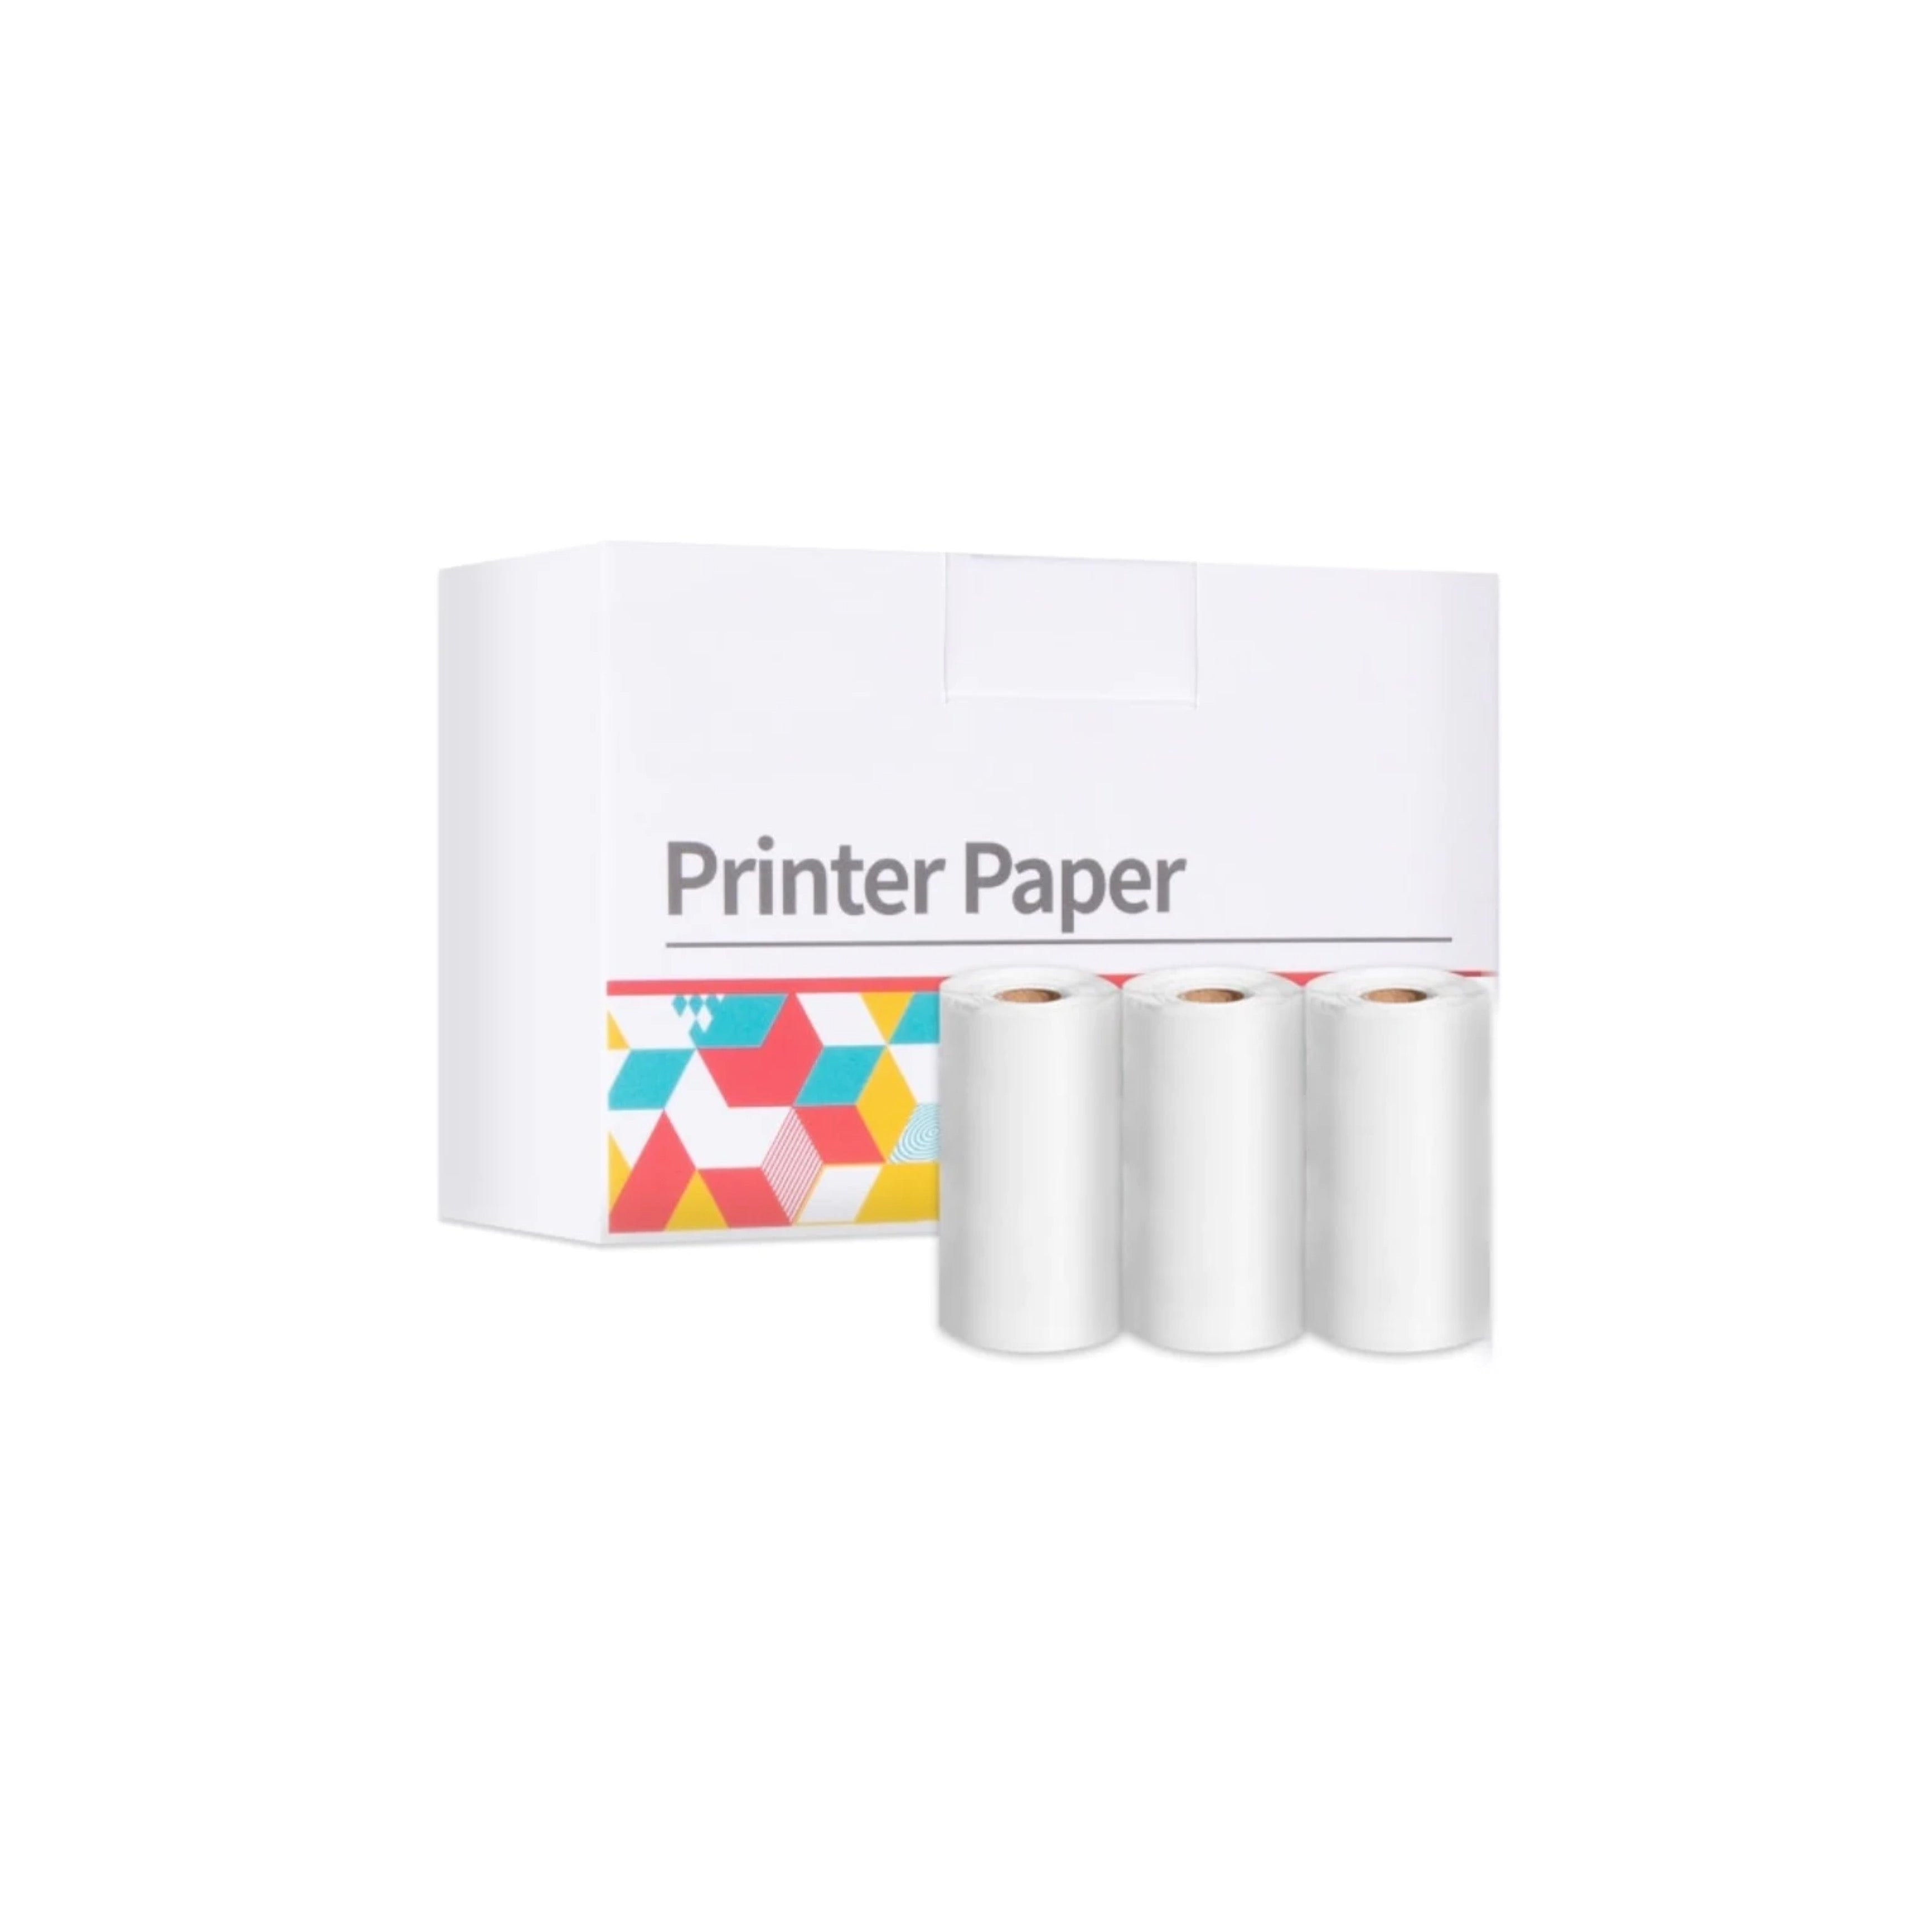 Nuclasx Pocket Printer